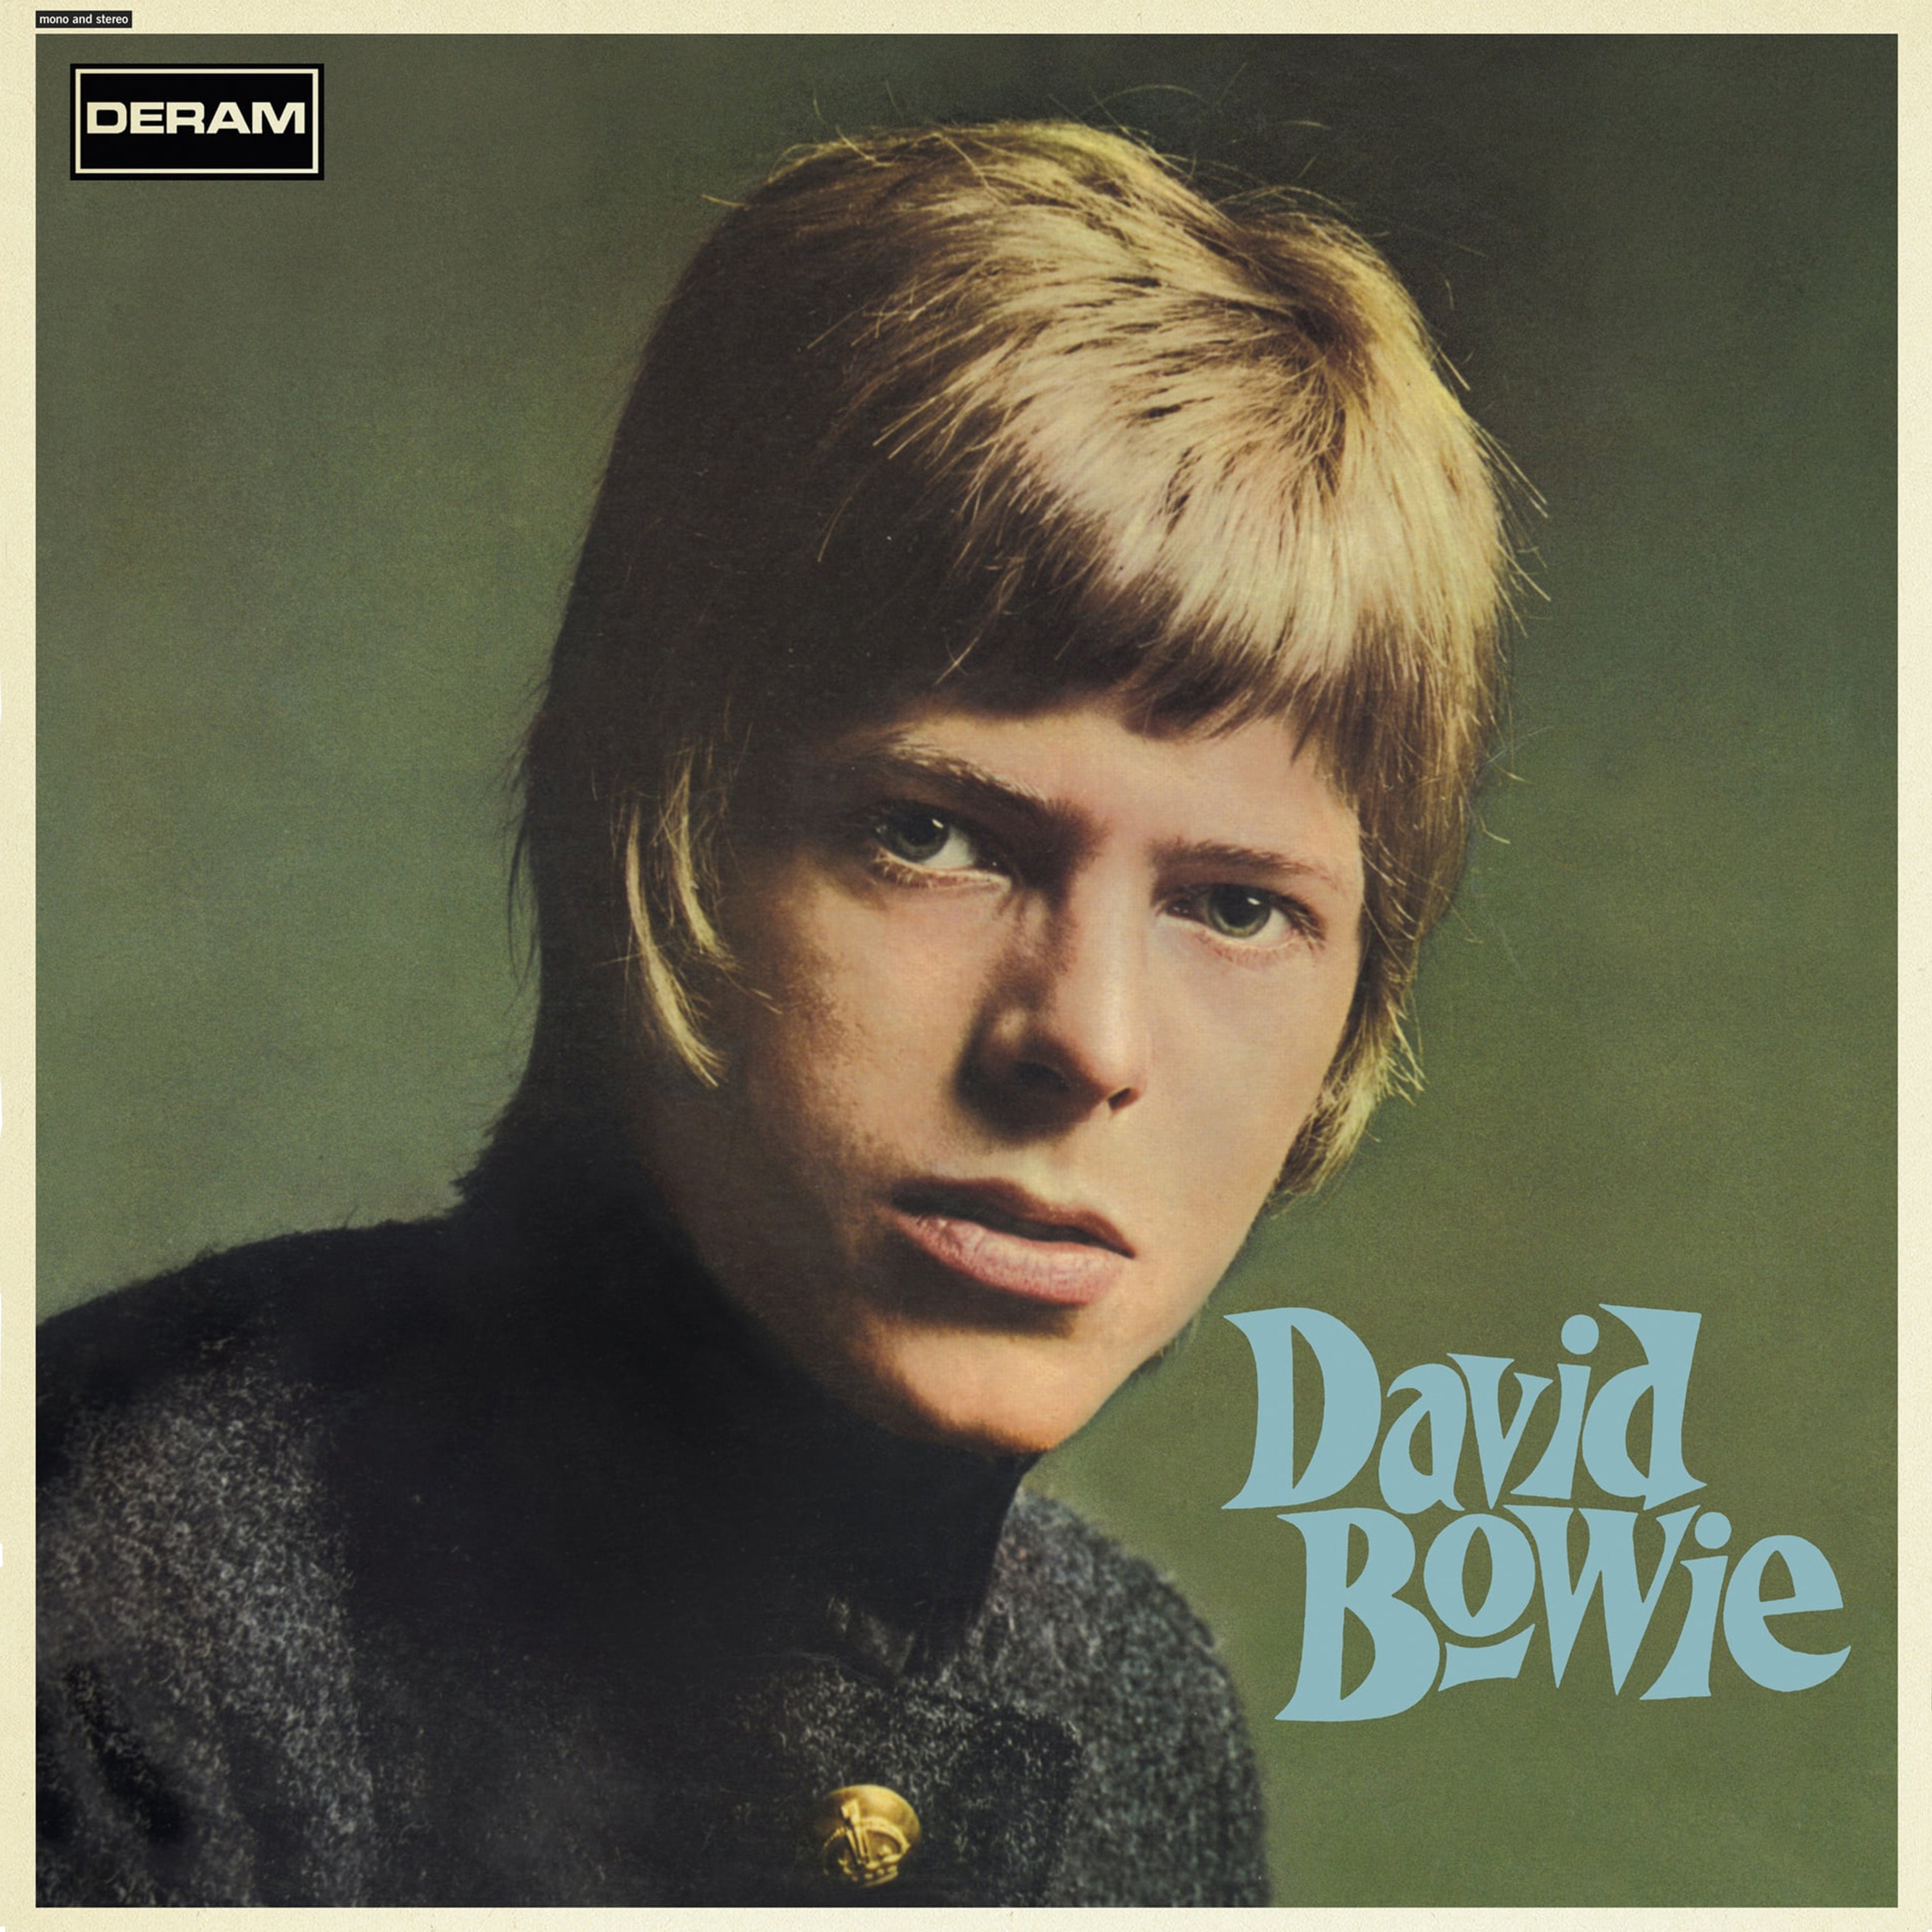 David Bowie - David Bowie: Deluxe Edition [Green Vinyl]